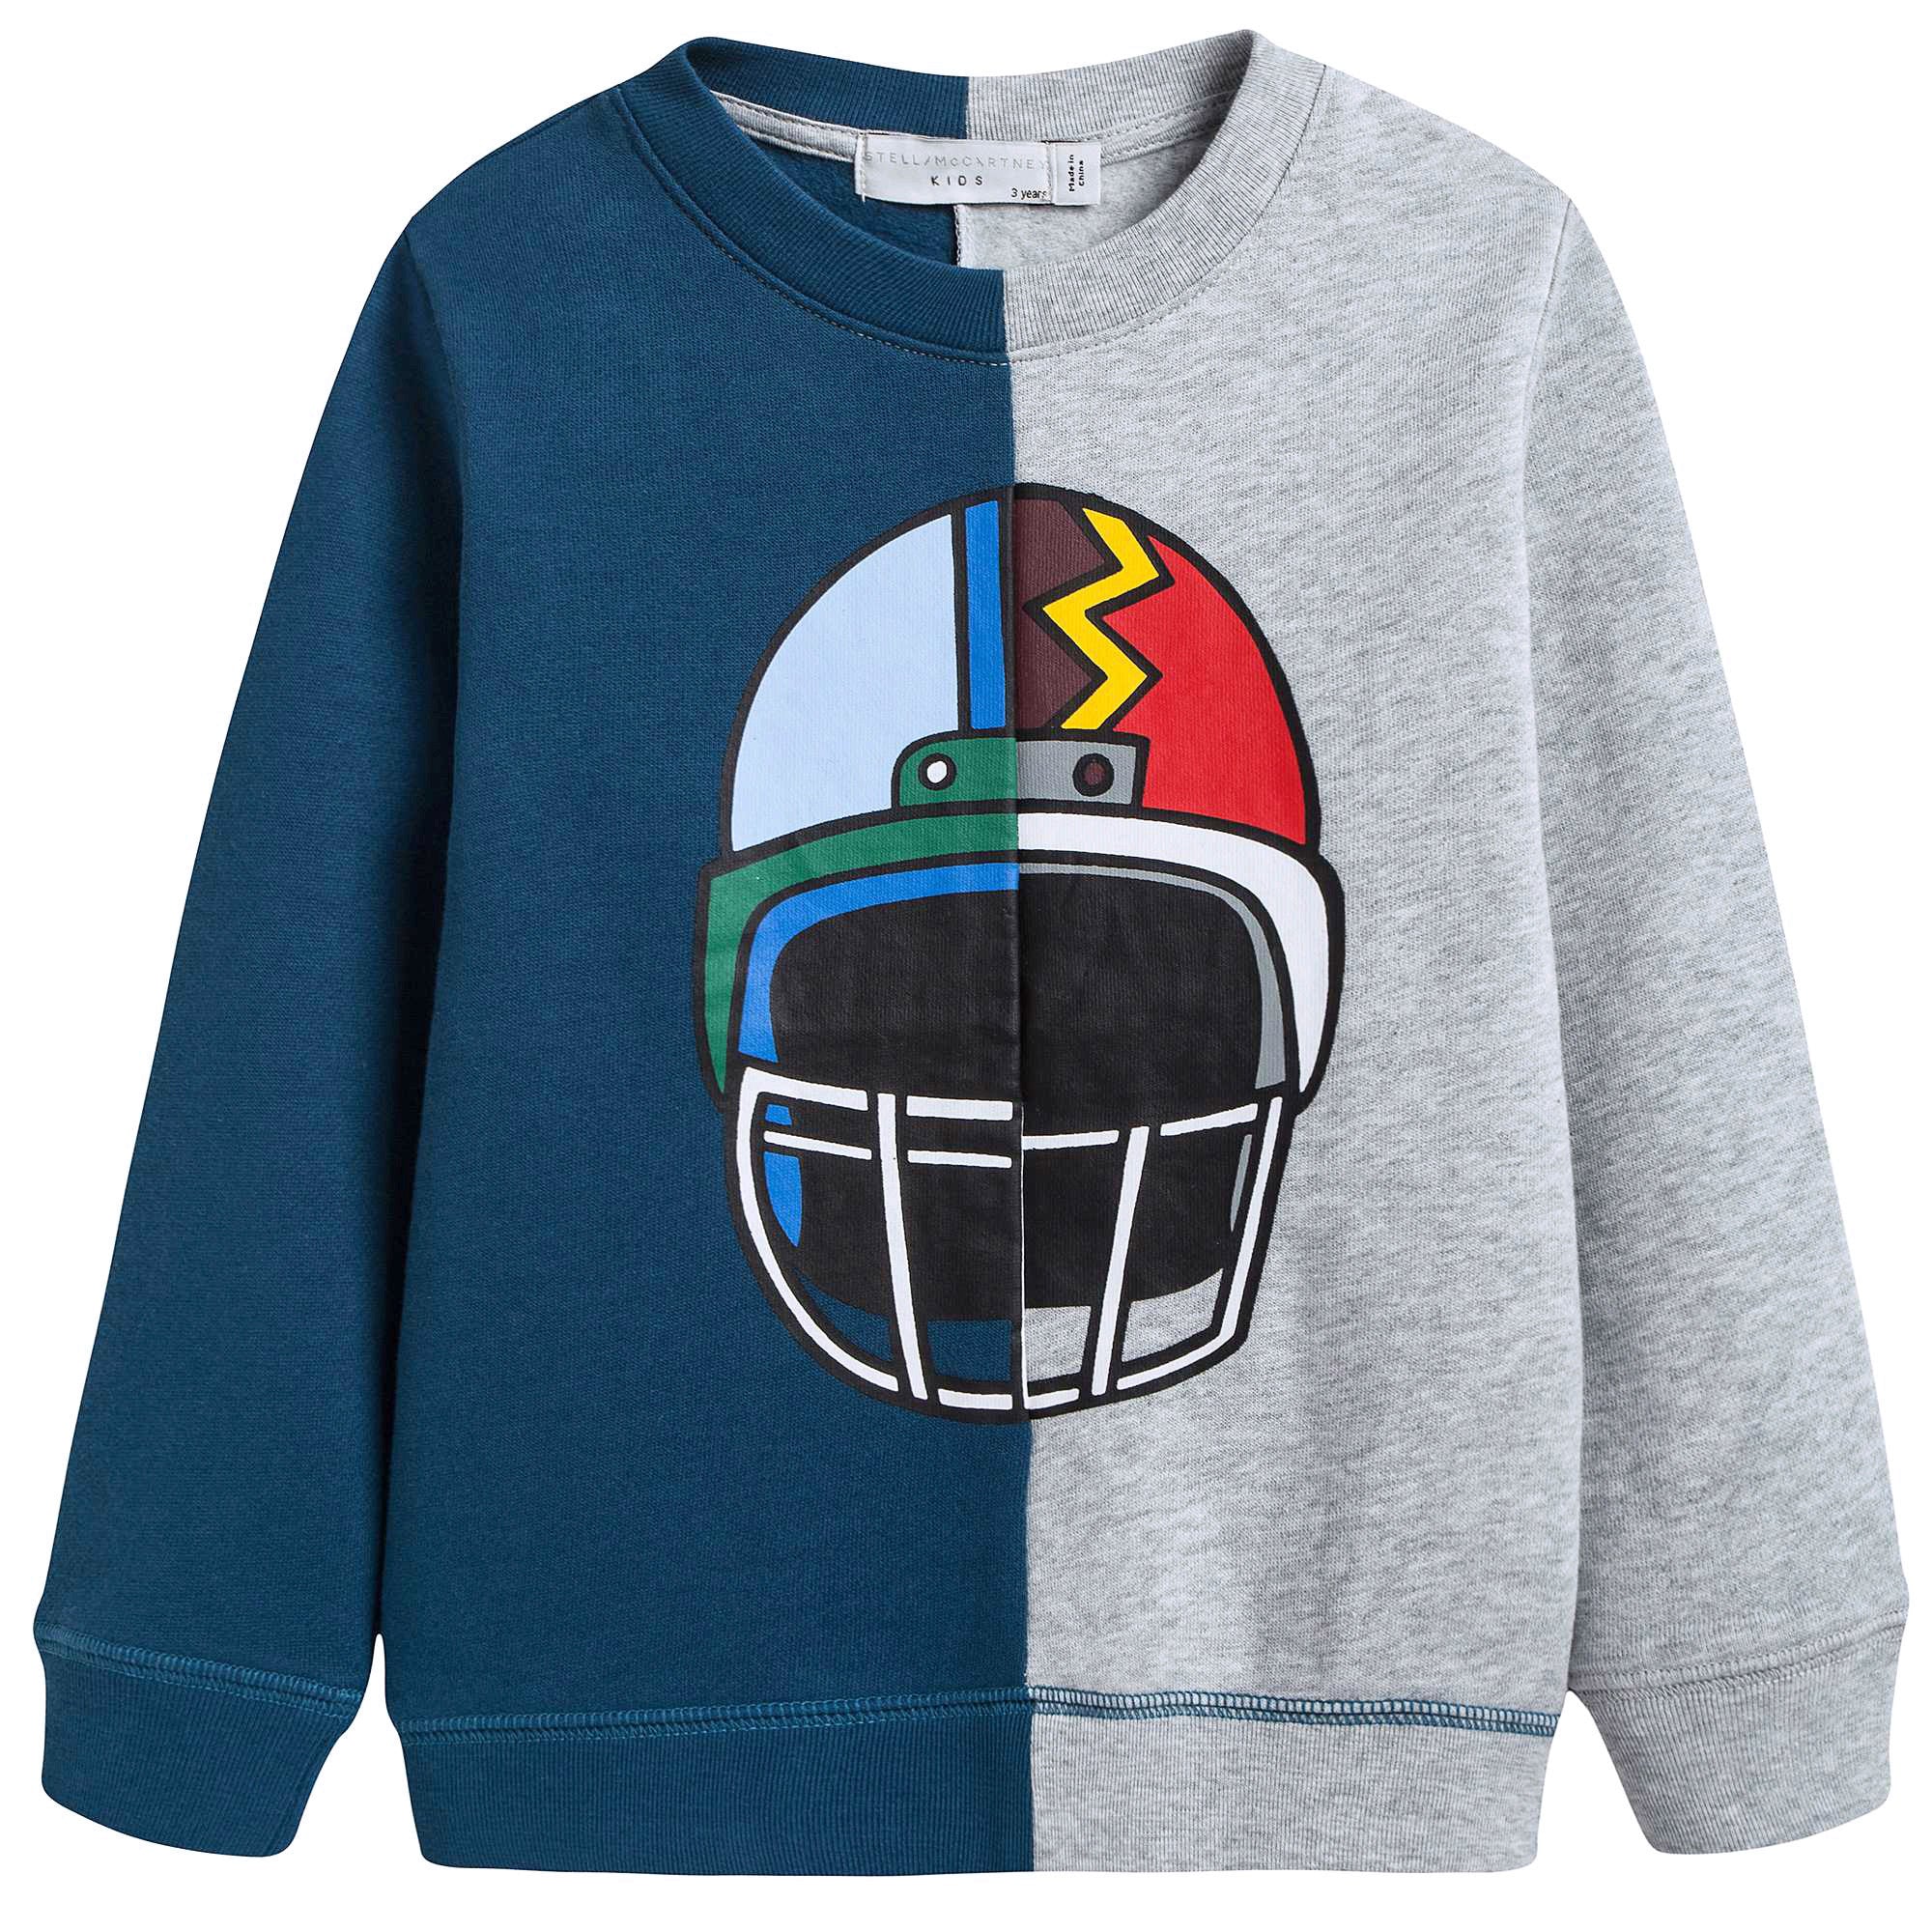 Boys Blue & Grey Ice Hockey Helmet Printed Sweatshirt